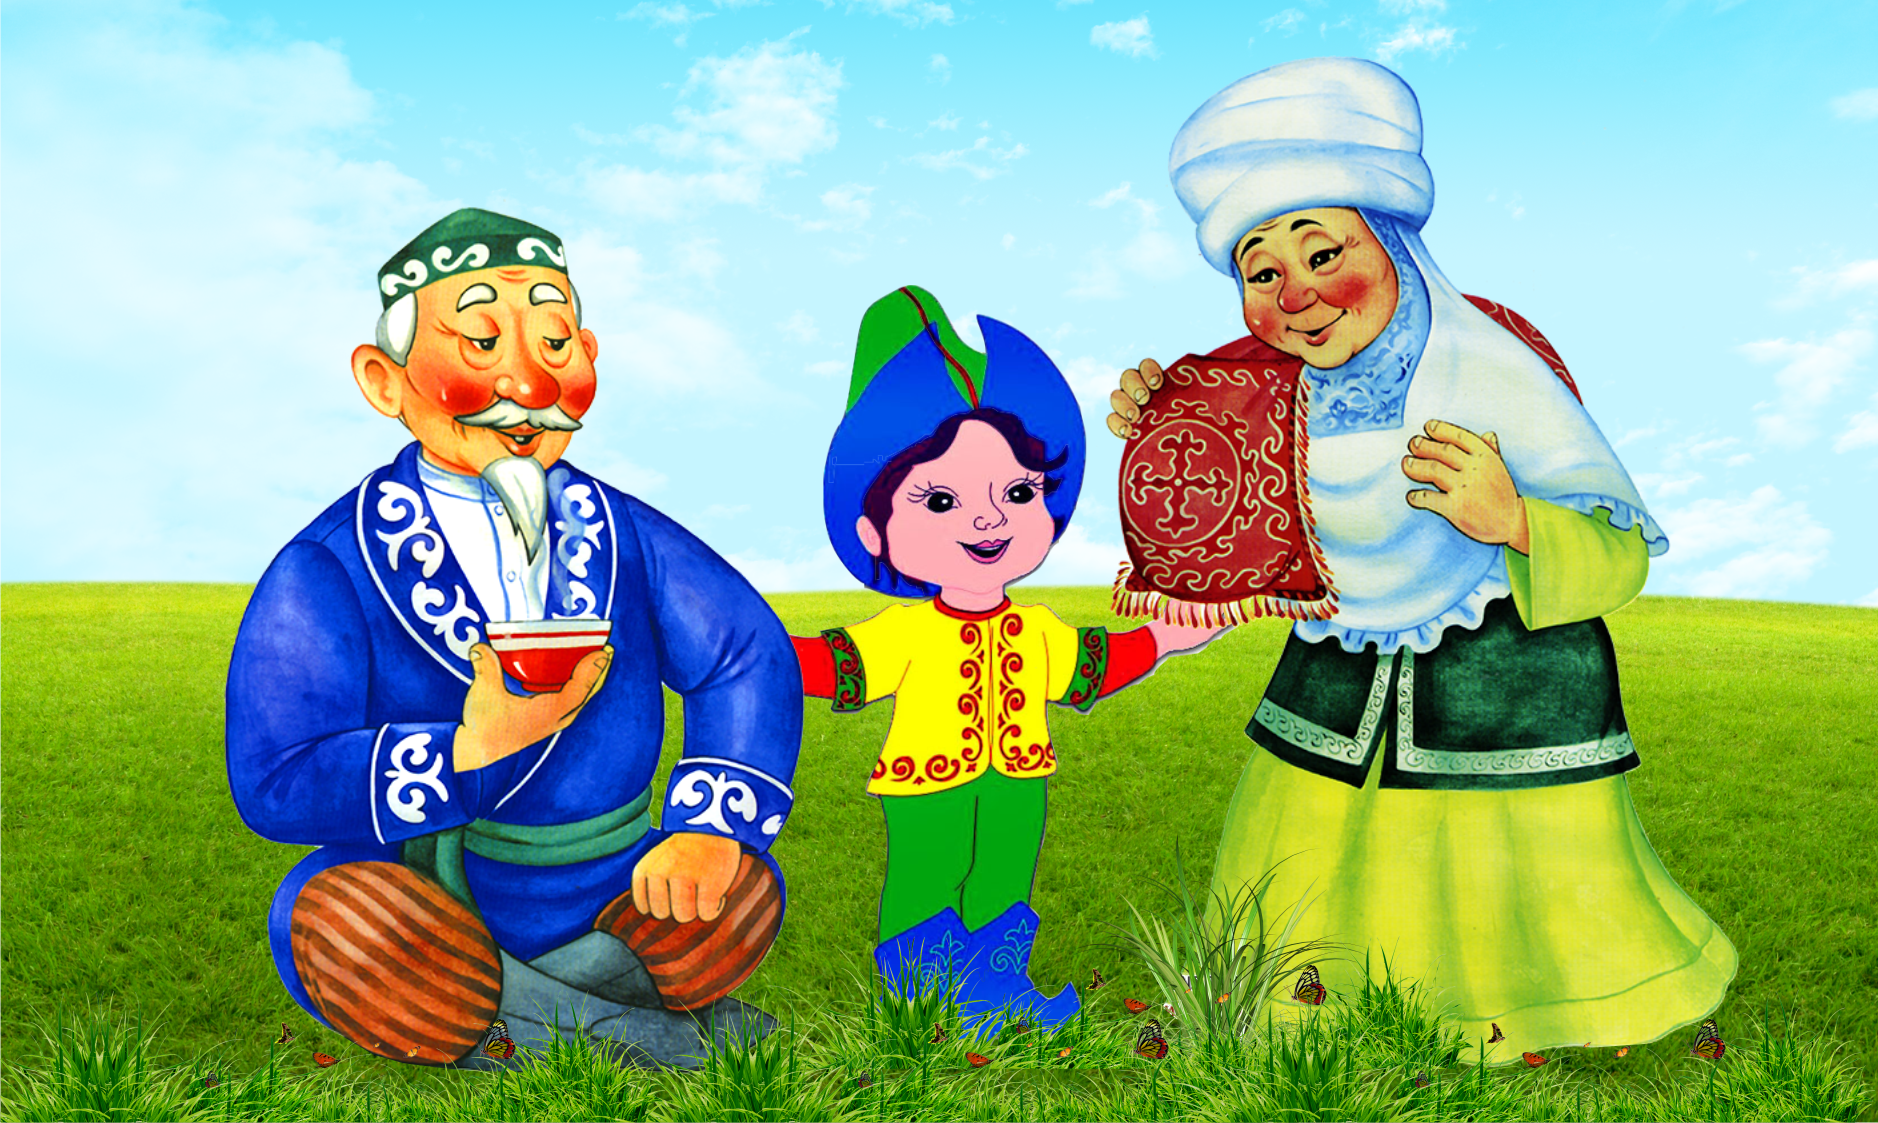 Ақпыз қара сарымыз ағайынбыз бәріміз. Казахский персонаж. Казахская бабушка с ребенком. Бабушка и дедушка казахи. Казахские сказочные герои.